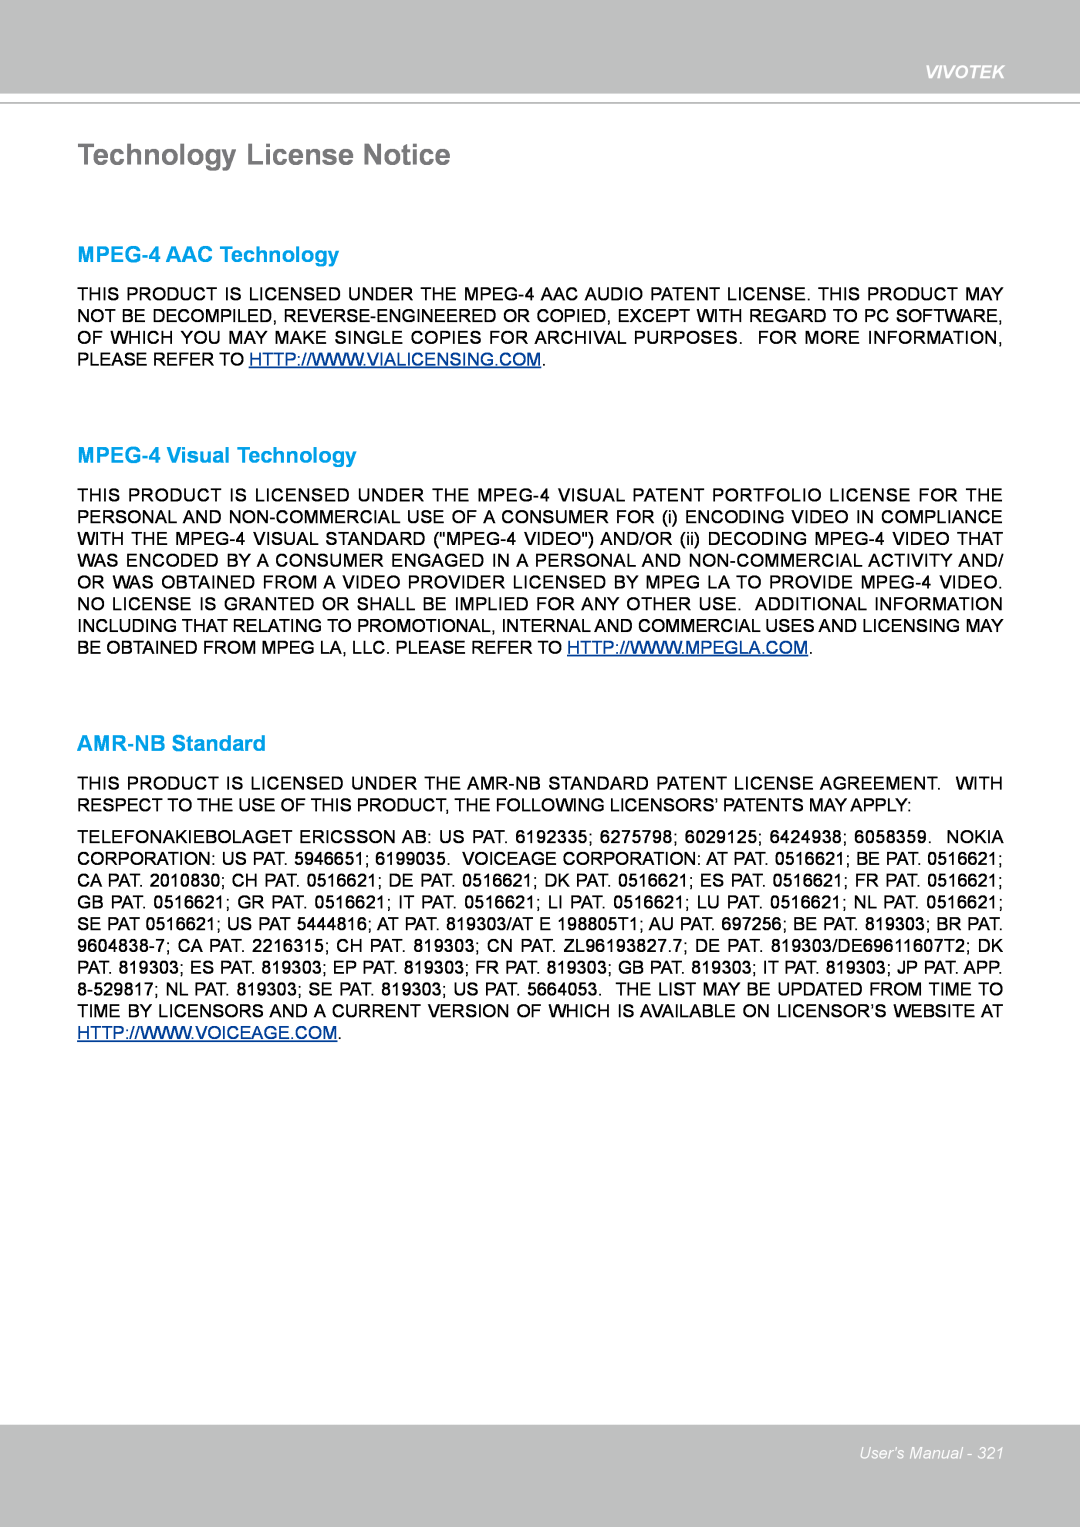 Vivotek FD8167-(T) Technology License Notice, MPEG-4AAC Technology, MPEG-4Visual Technology, AMR-NBStandard, Vivotek 